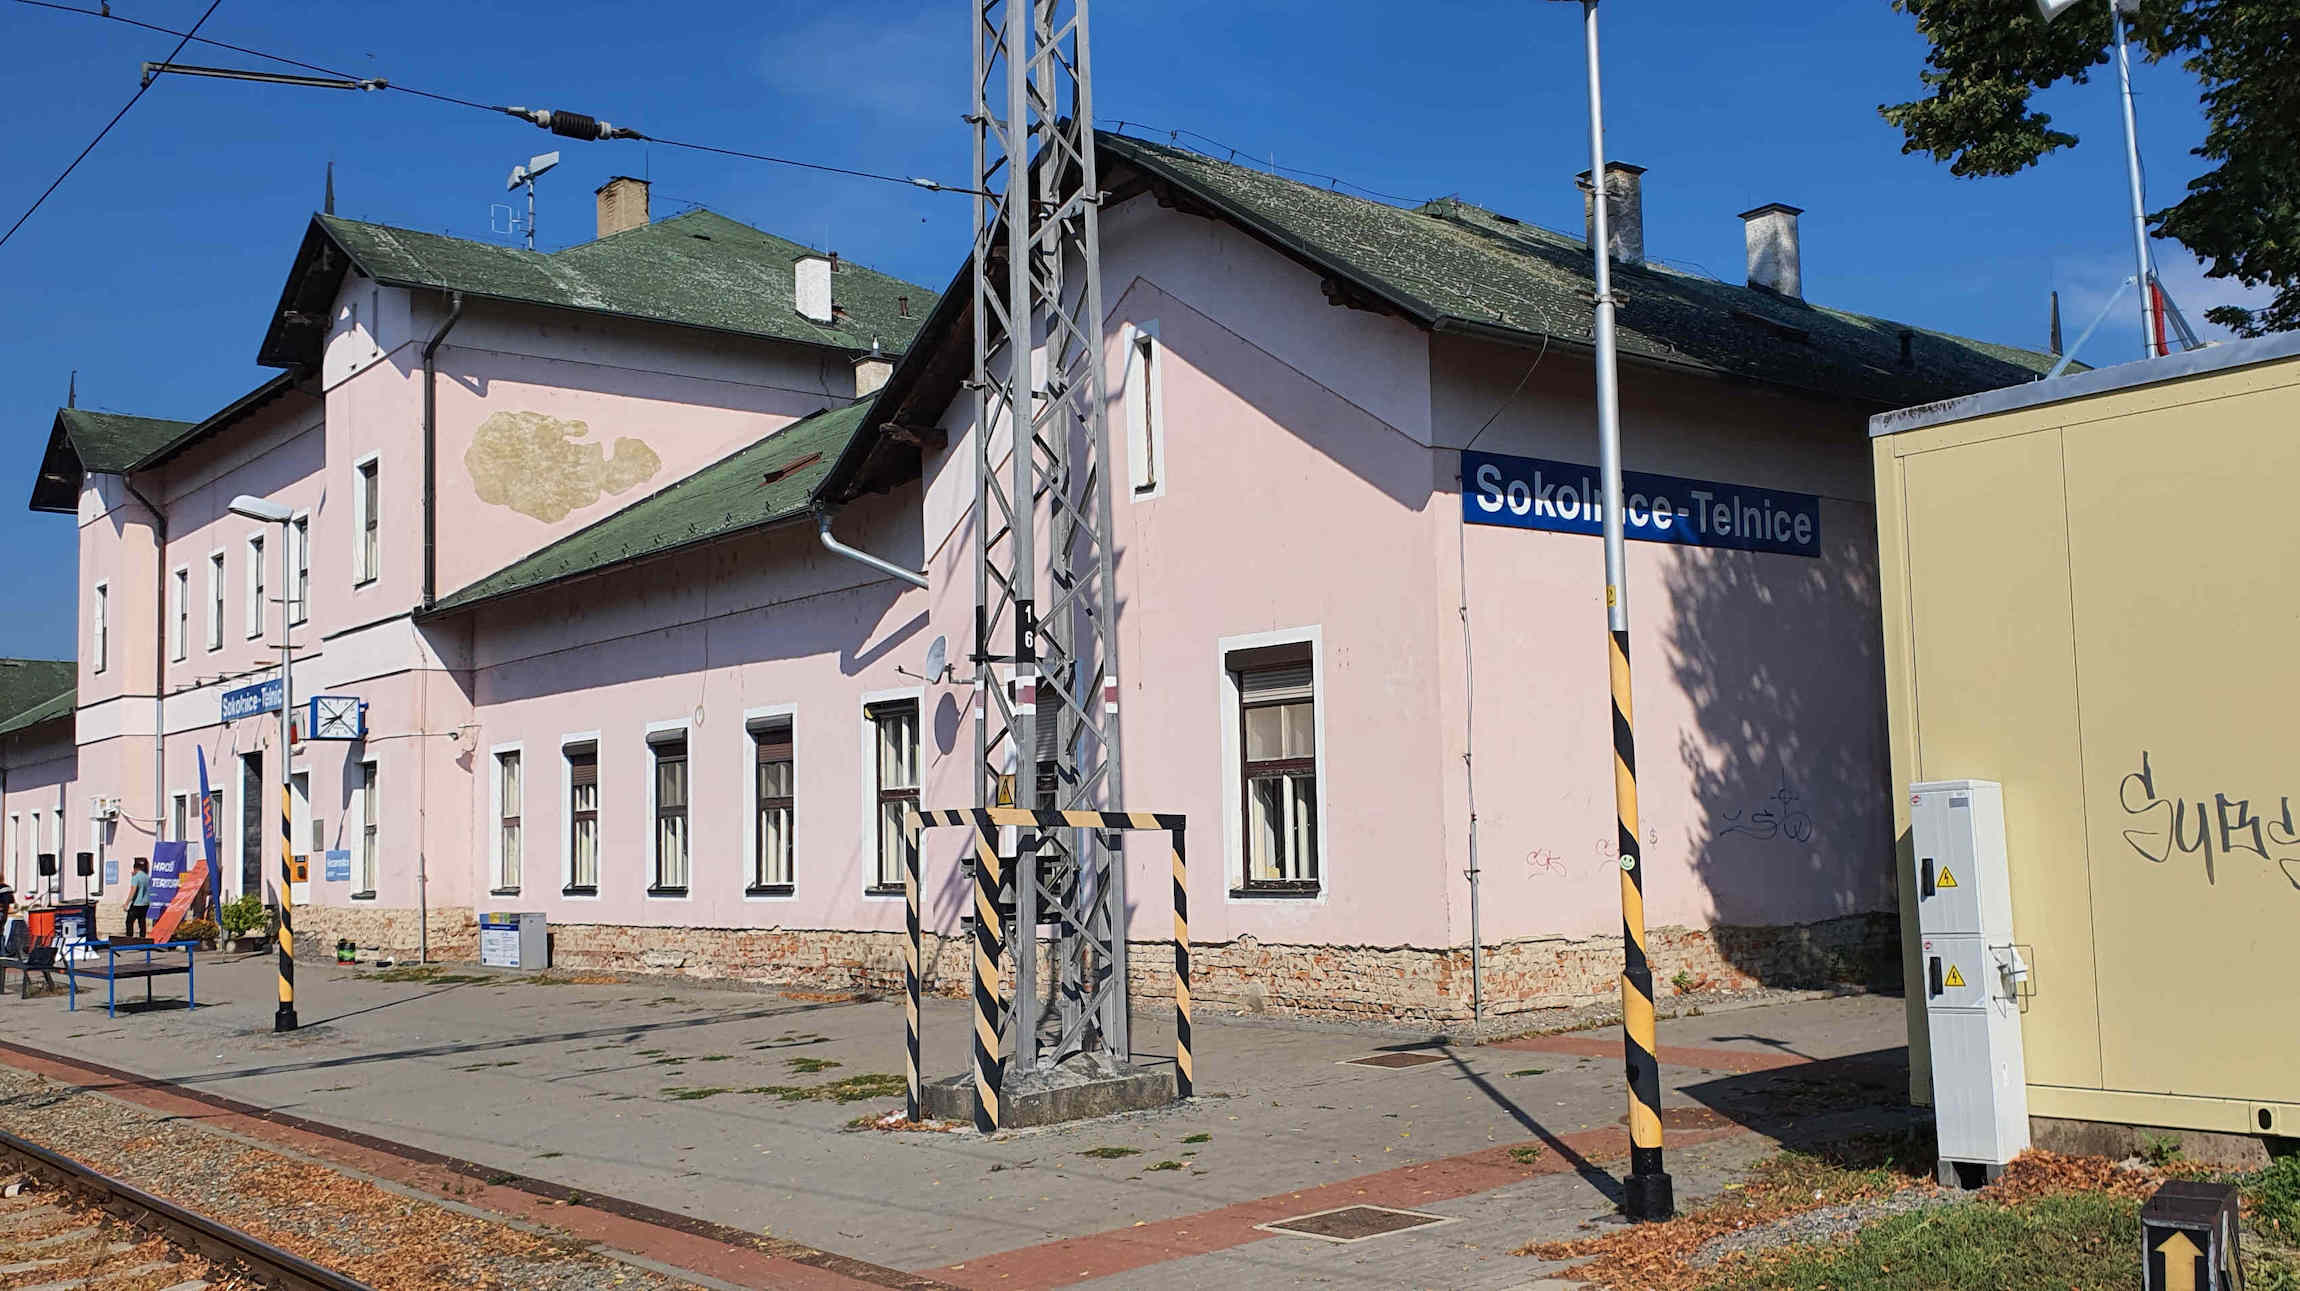 Rekonstrukce žel. stanice Sokolnice-Telnice